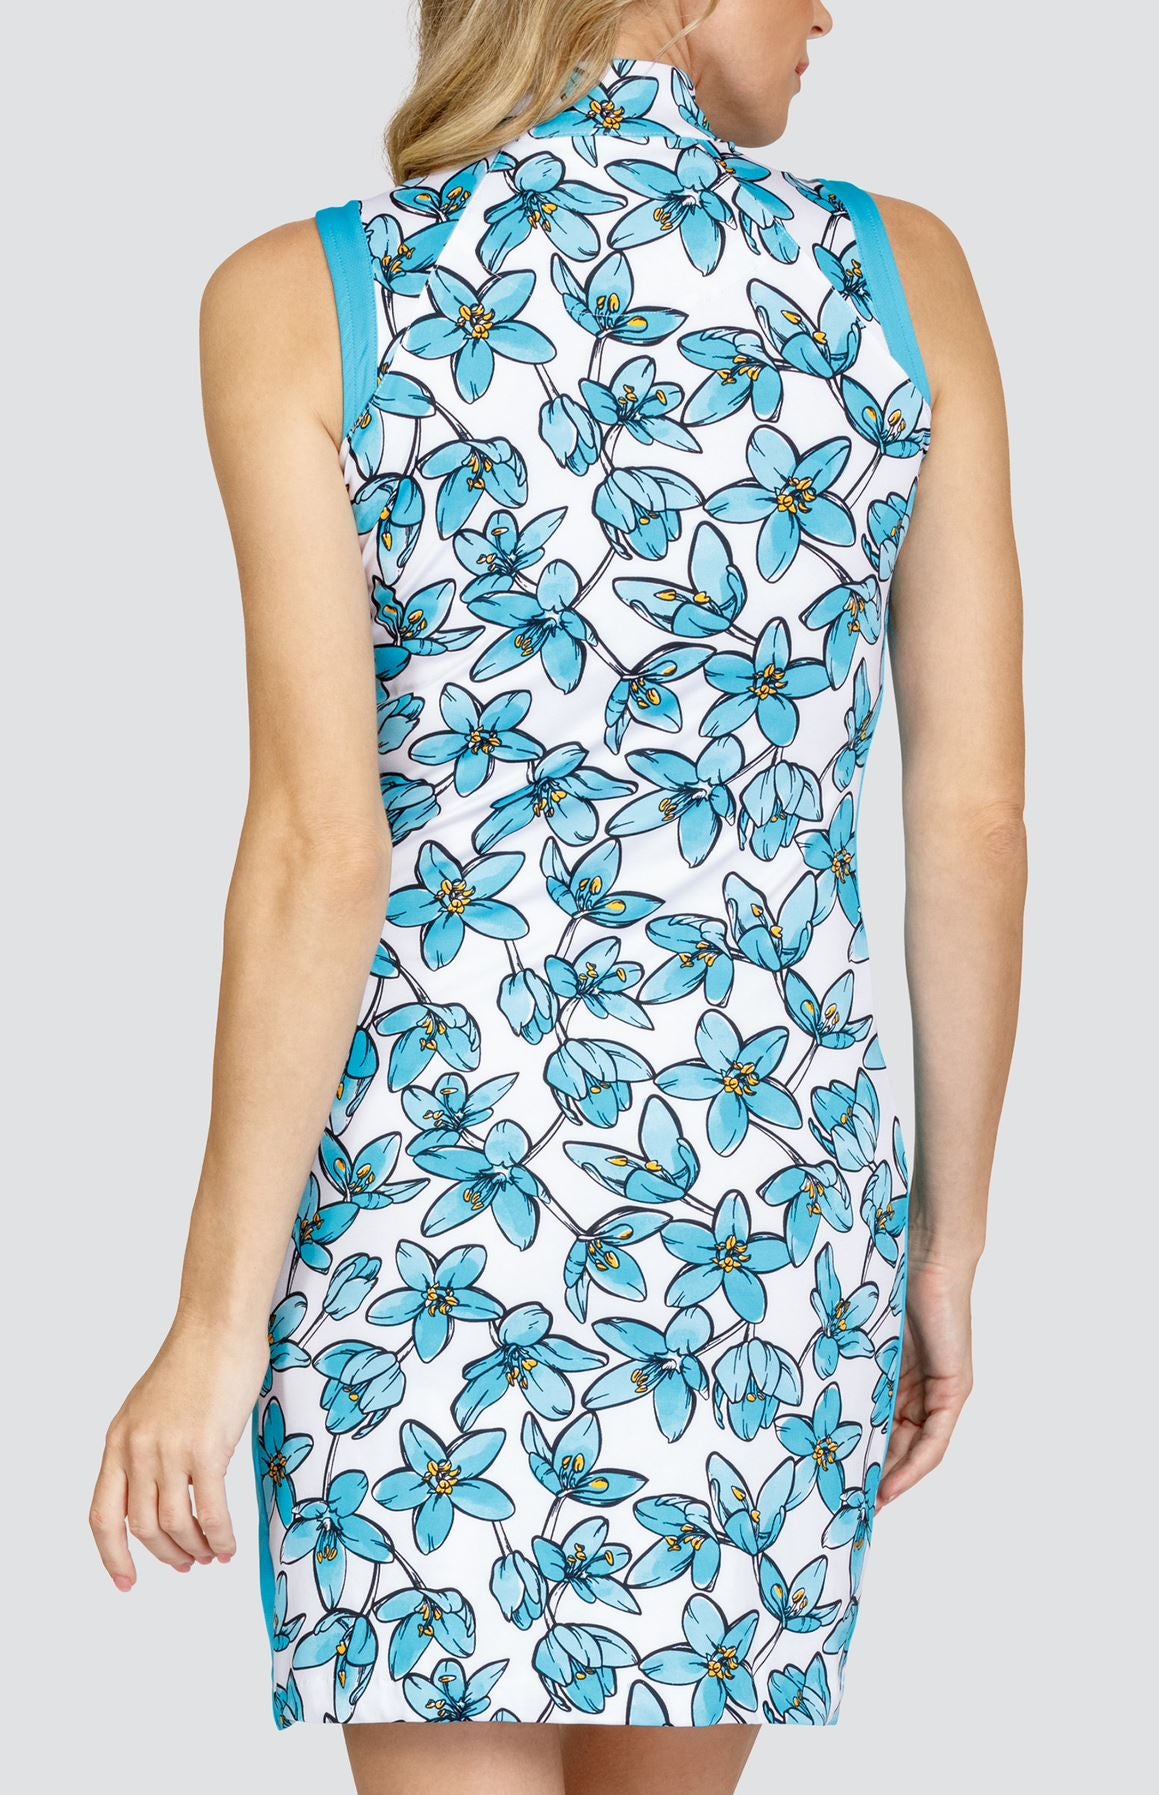 Tail- Sleeveless Daisy Amaryllis Dress (Style#: GD1872-P833)